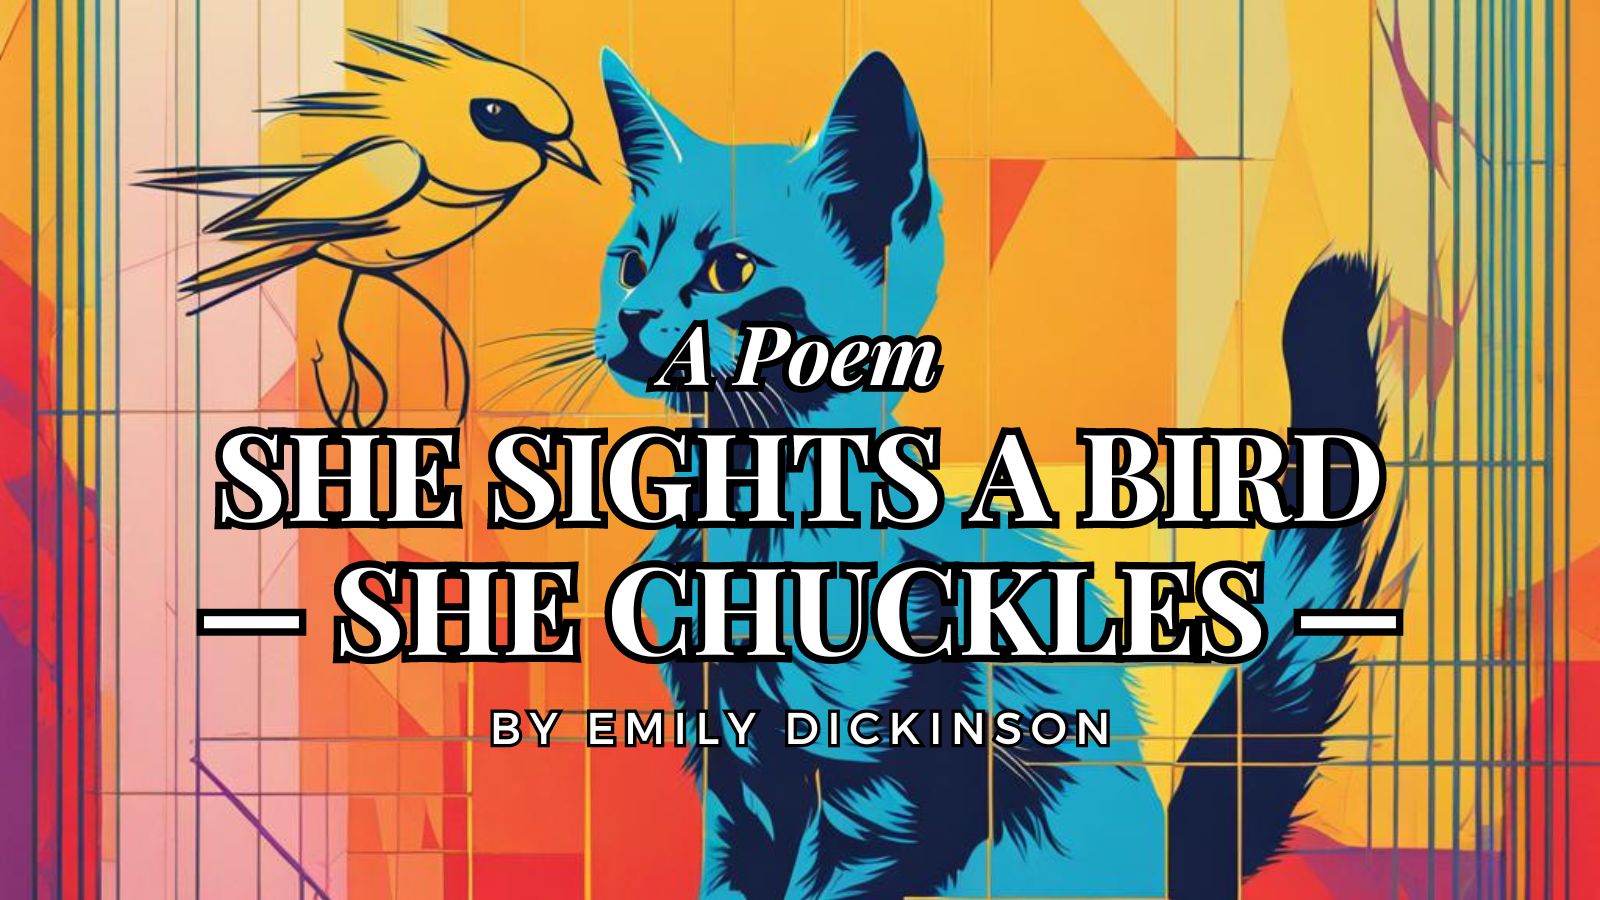 She sights a Bird — she chuckles — by Emily Dickinson